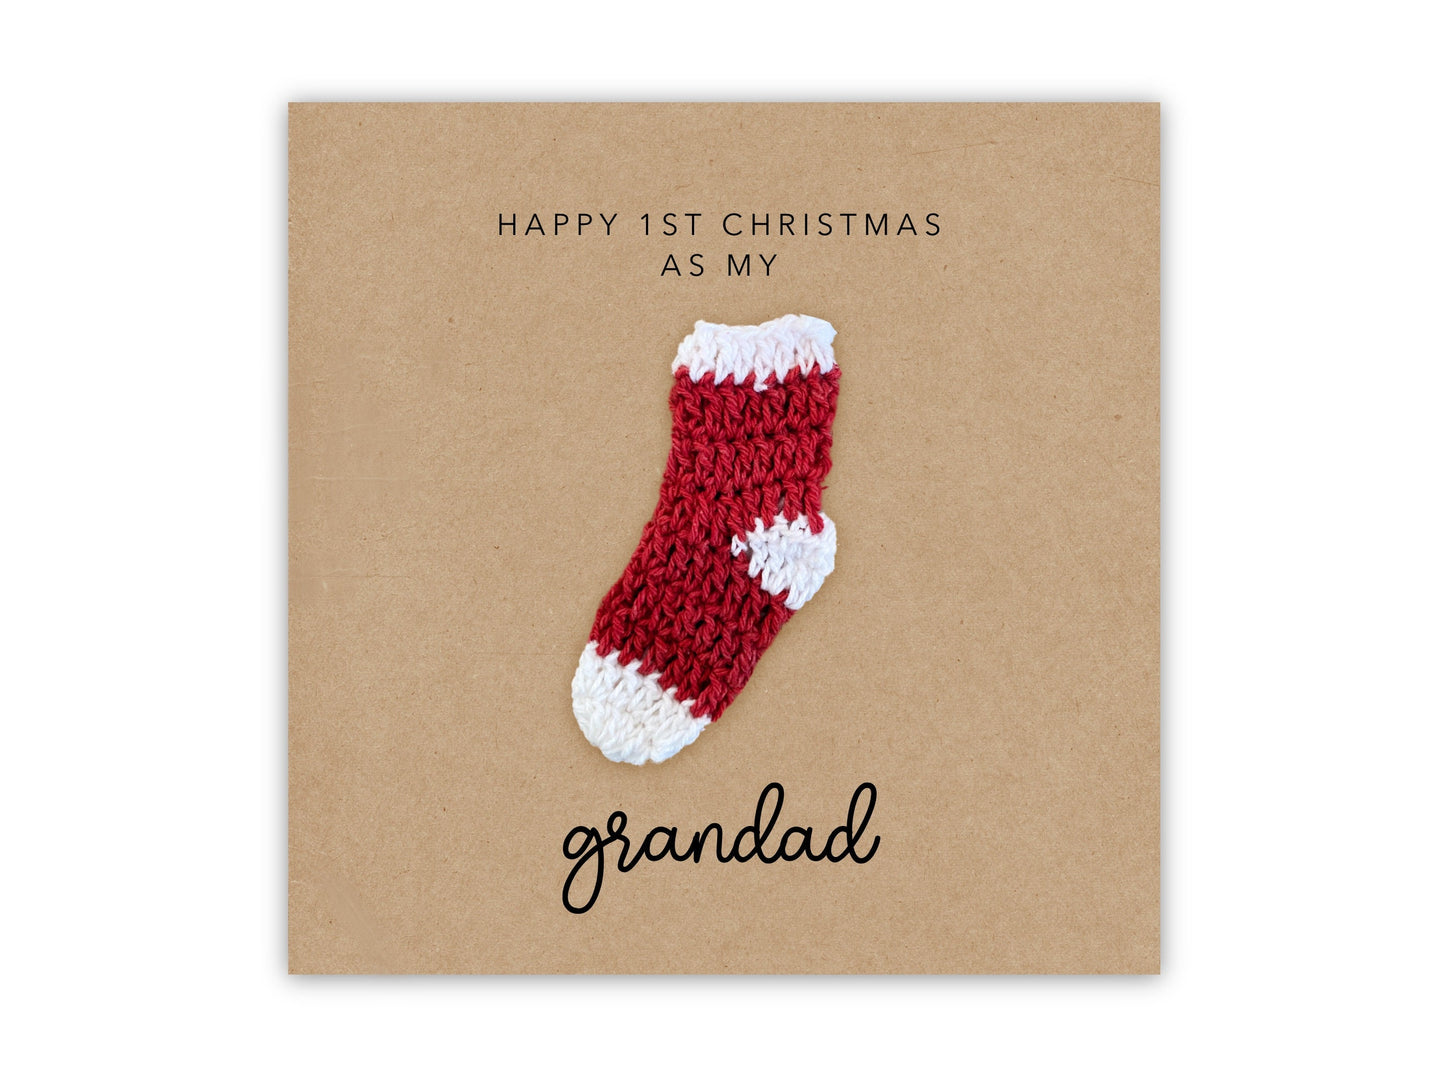 Happy First Christmas Card as My Grandad, Christmas Card for Grandad, 1st Christmas Grand Dad Card, Granddad Christmas Card, Ornament